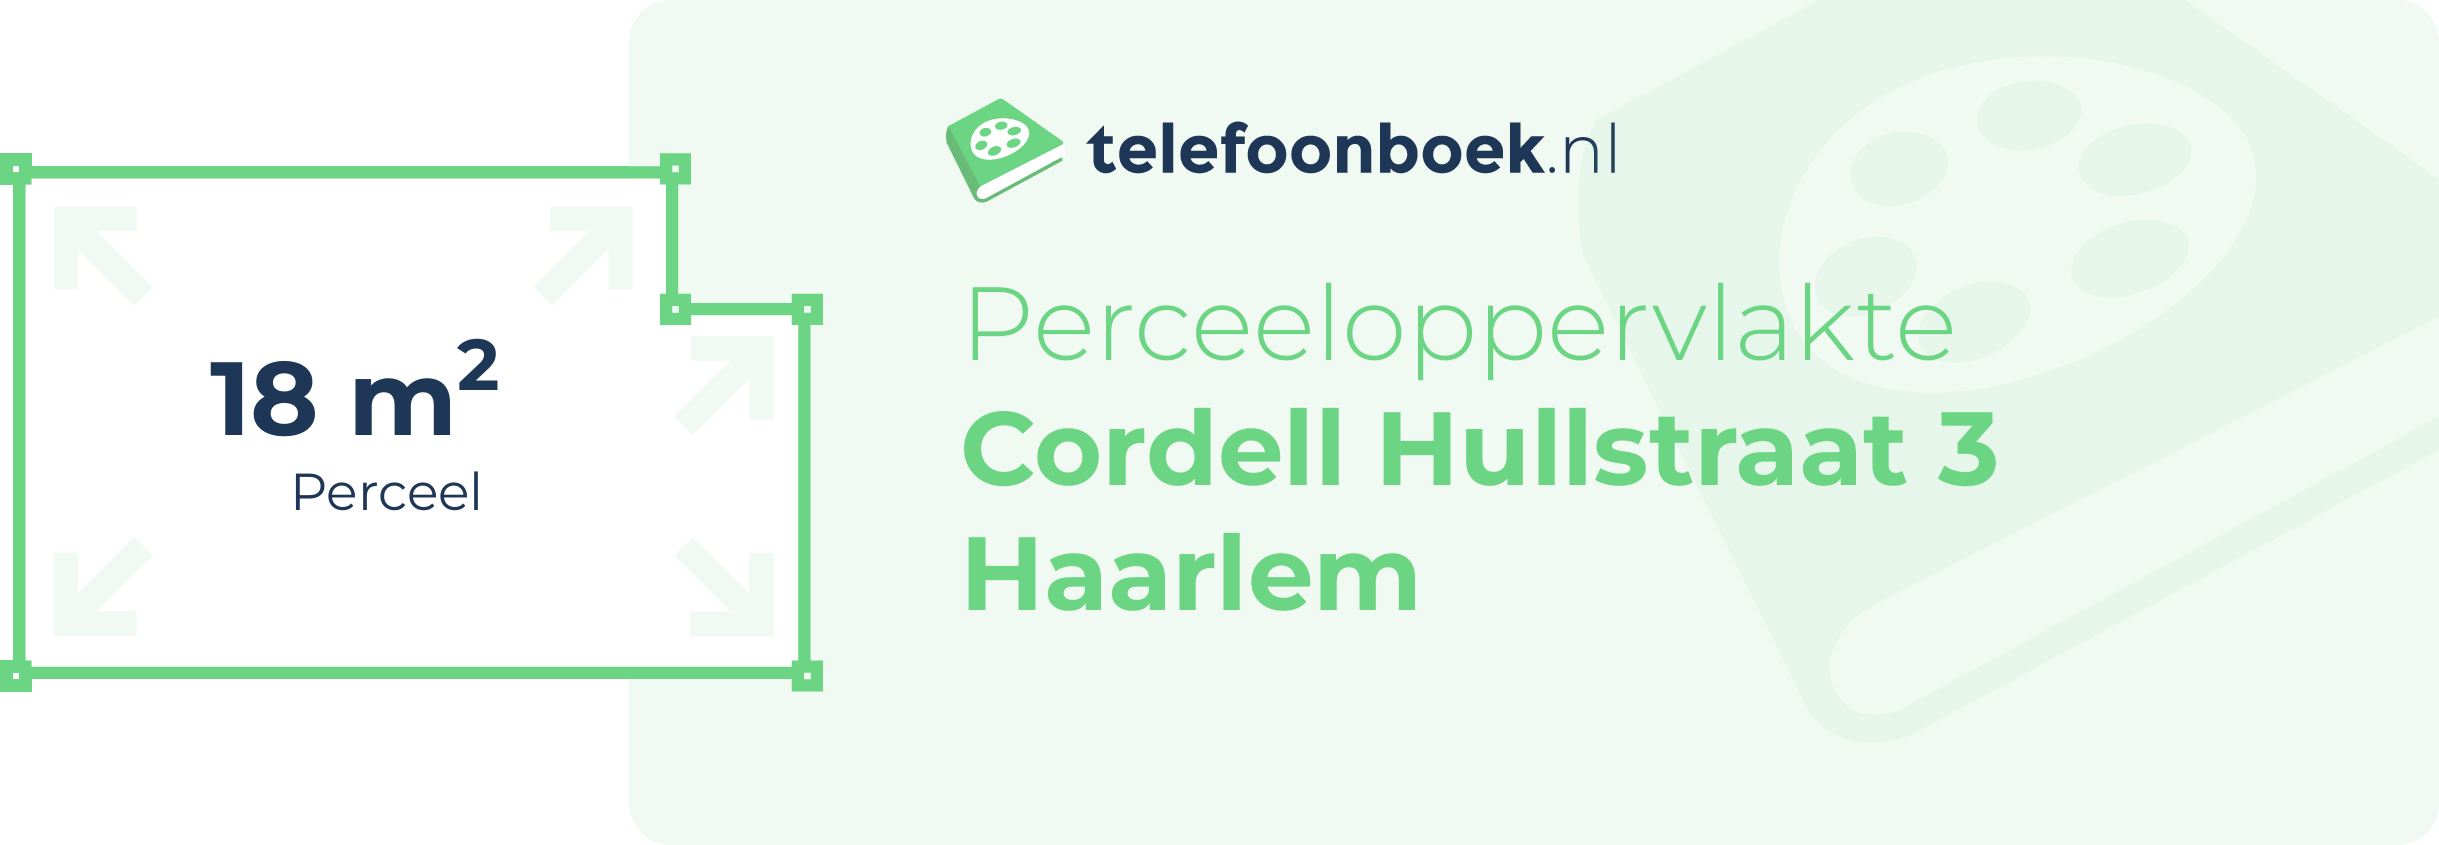 Perceeloppervlakte Cordell Hullstraat 3 Haarlem